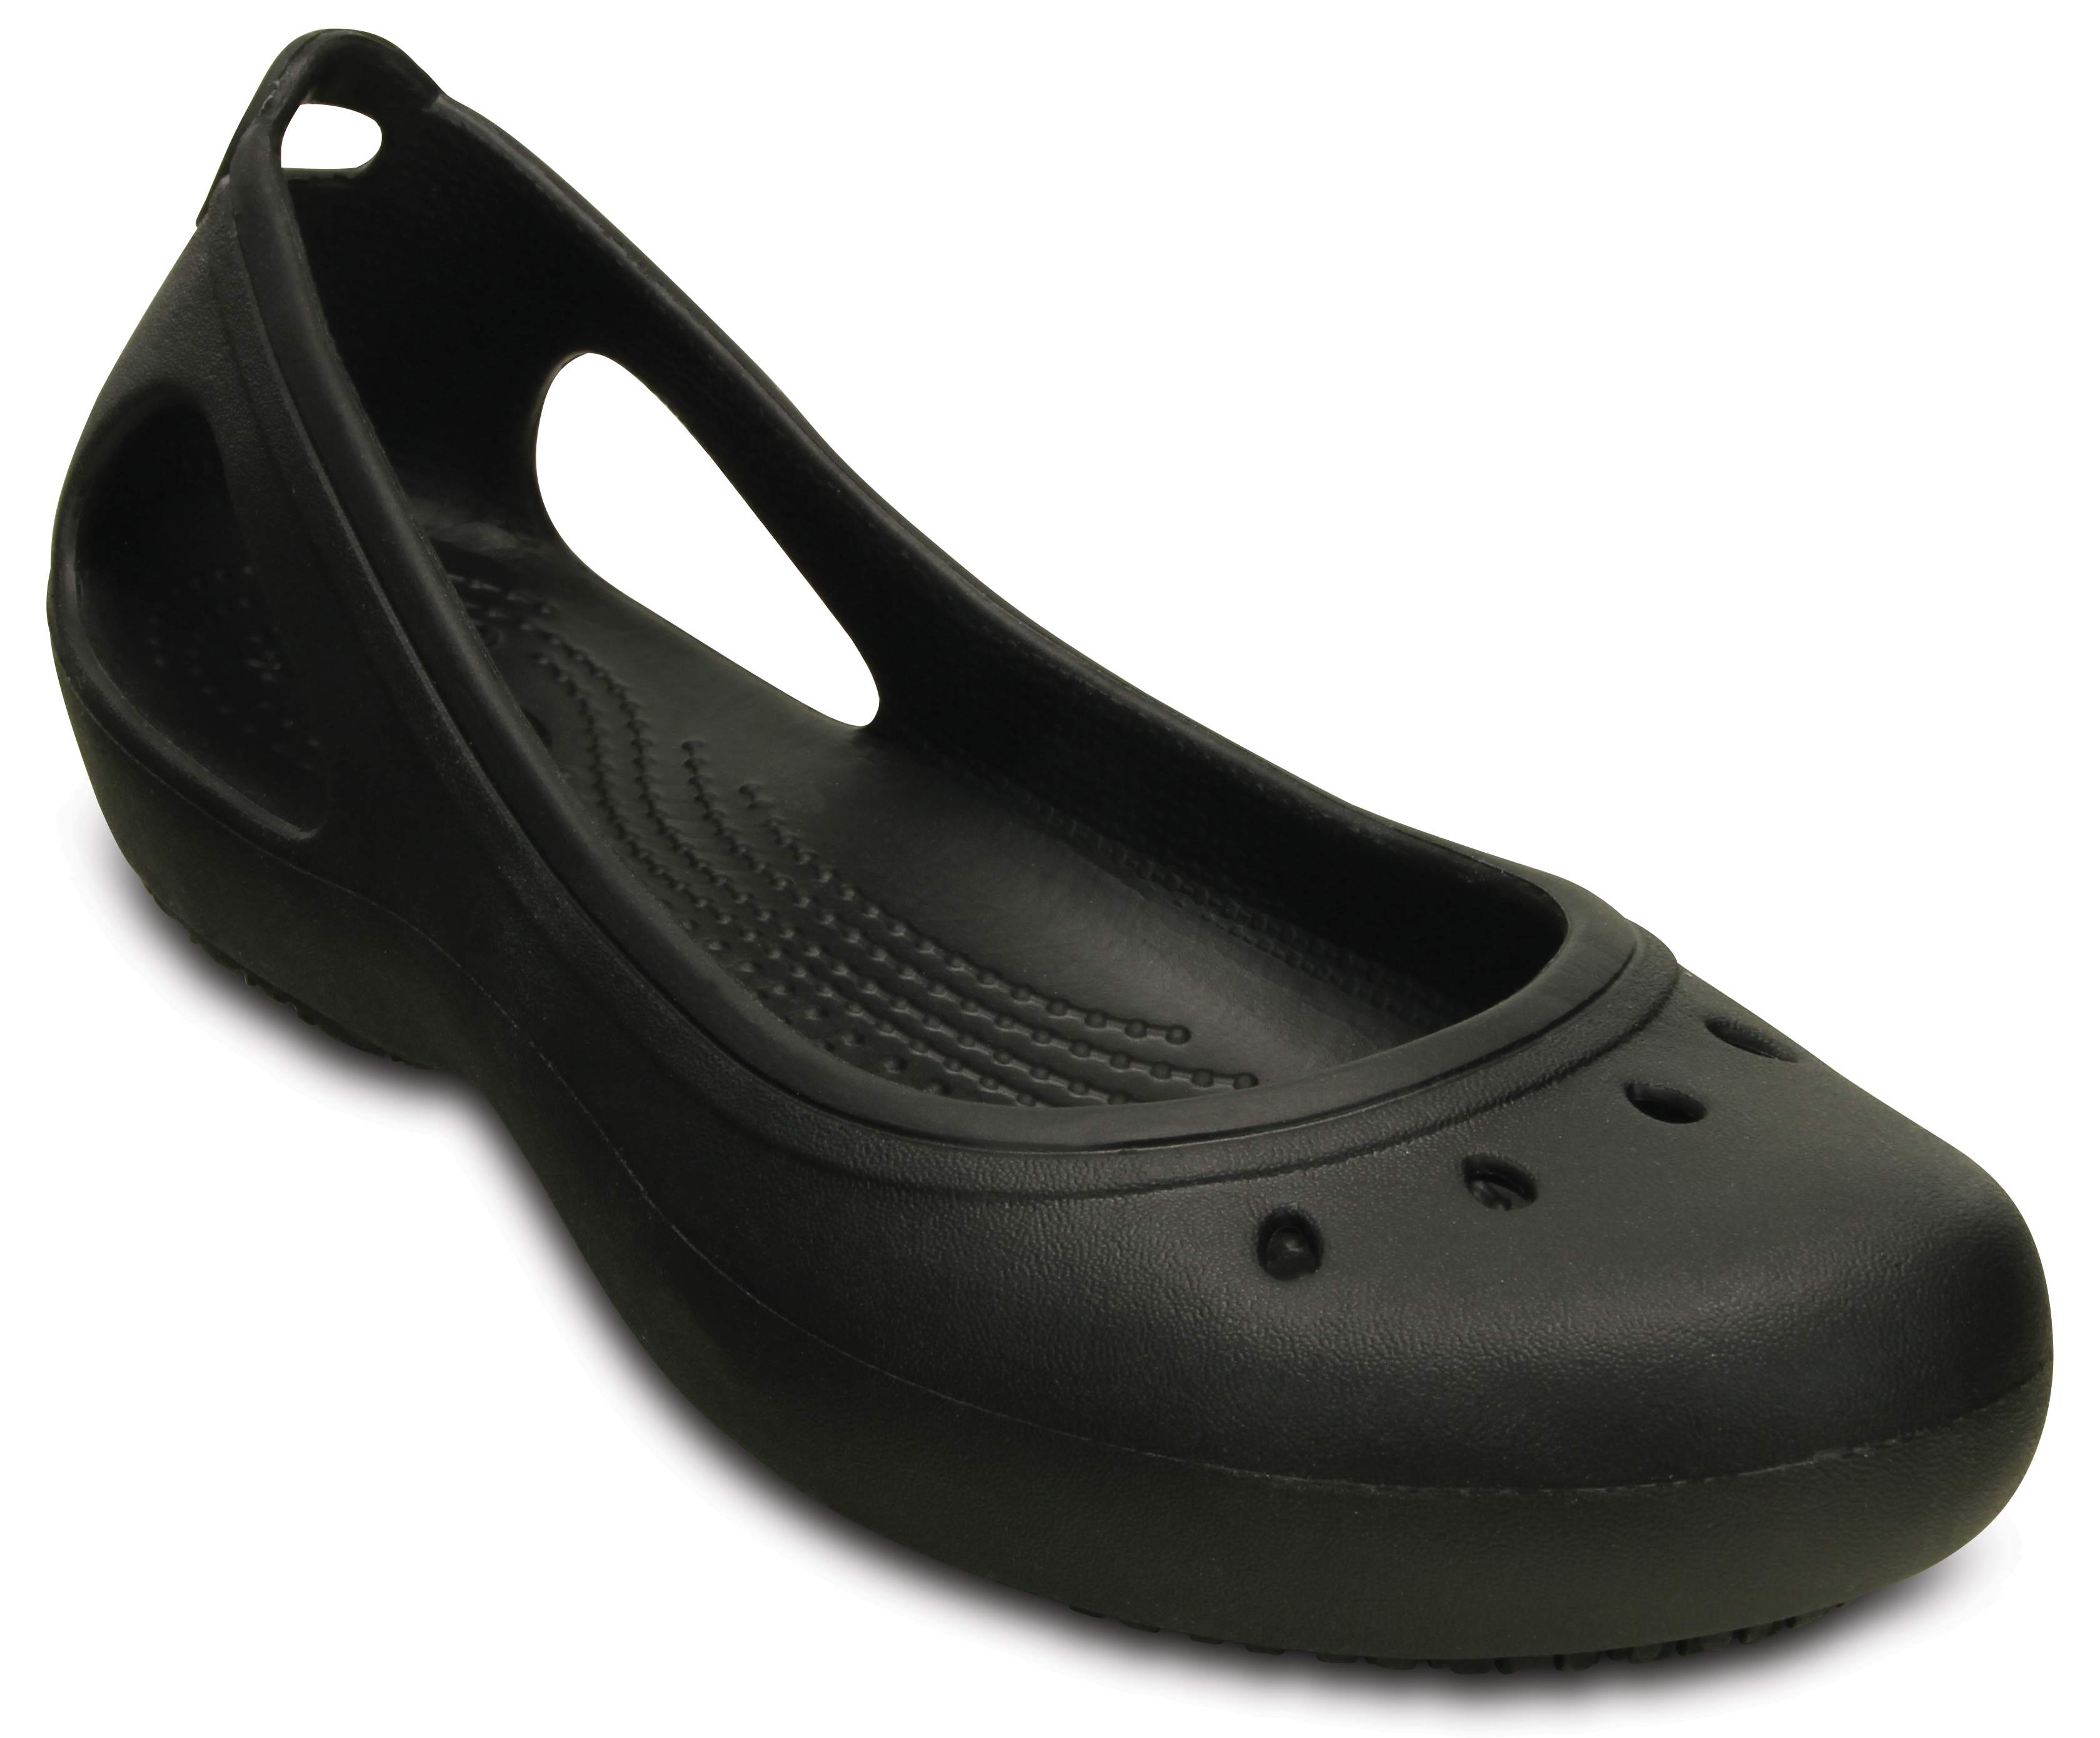 crocs for women shoes